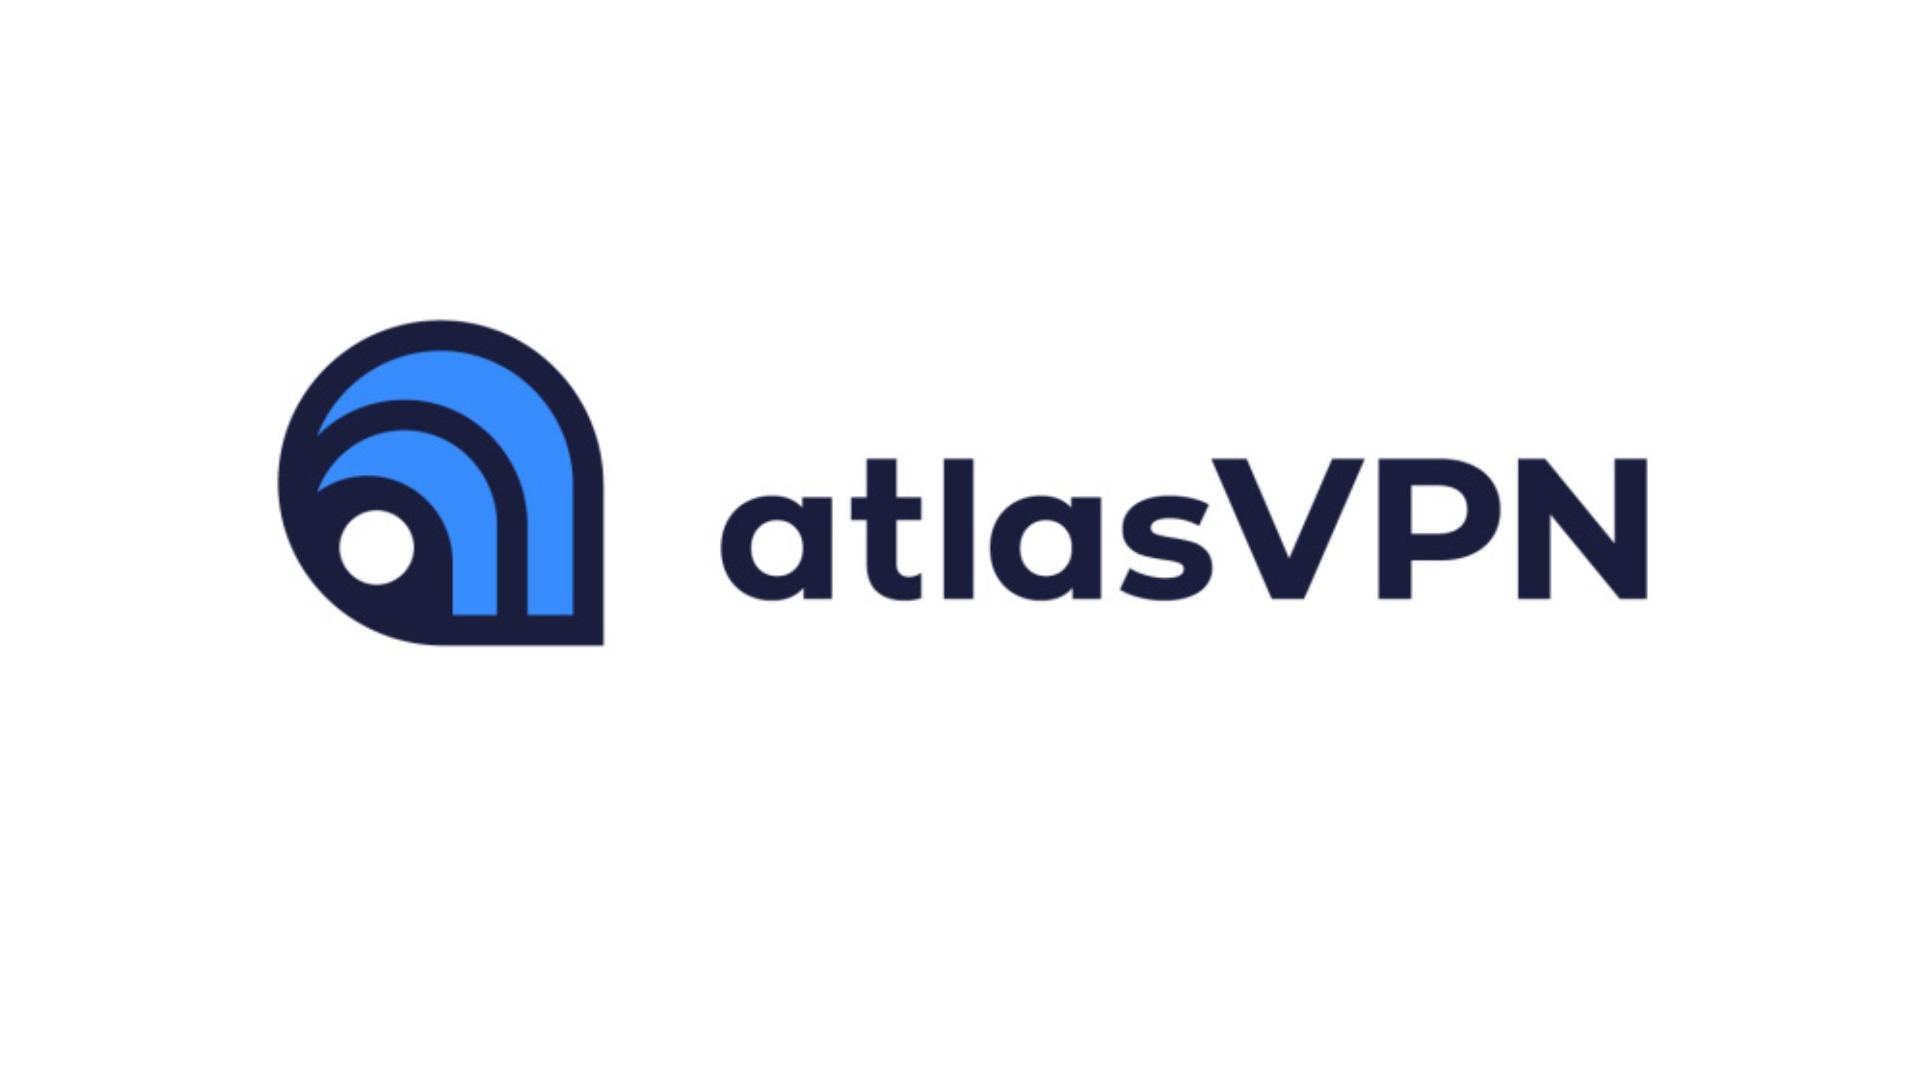 Best Windows 10 VPN - AtlasVPN. Image shows its logo on a white background.